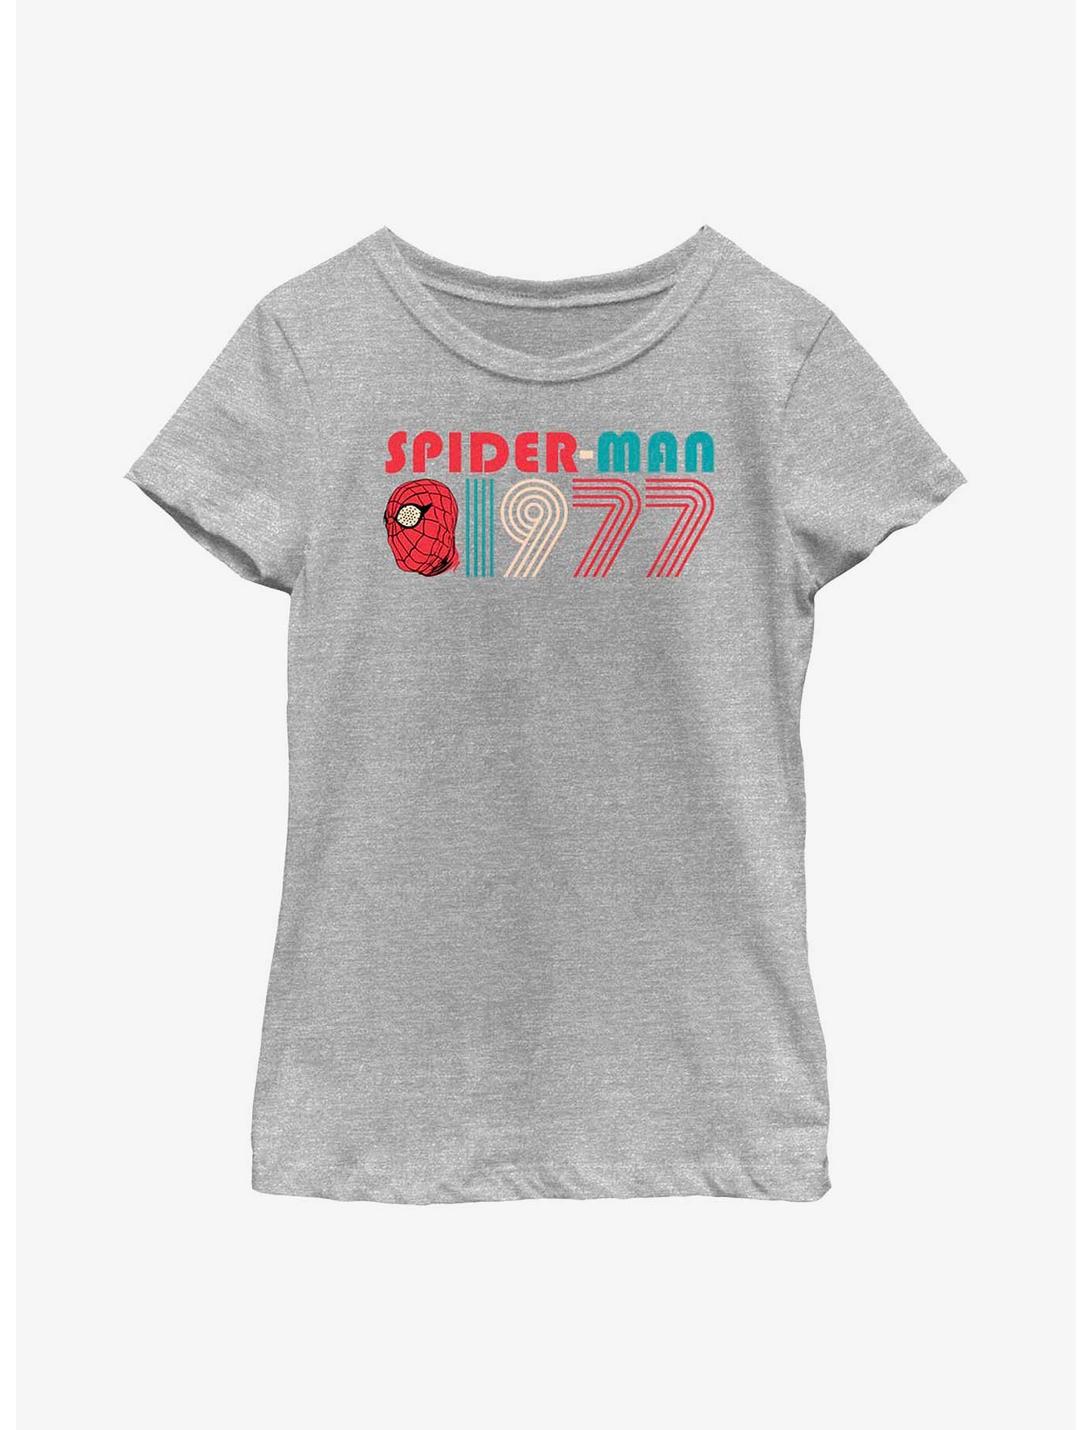 Marvel Spider-Man 1977 Retro Youth Girls T-Shirt, ATH HTR, hi-res